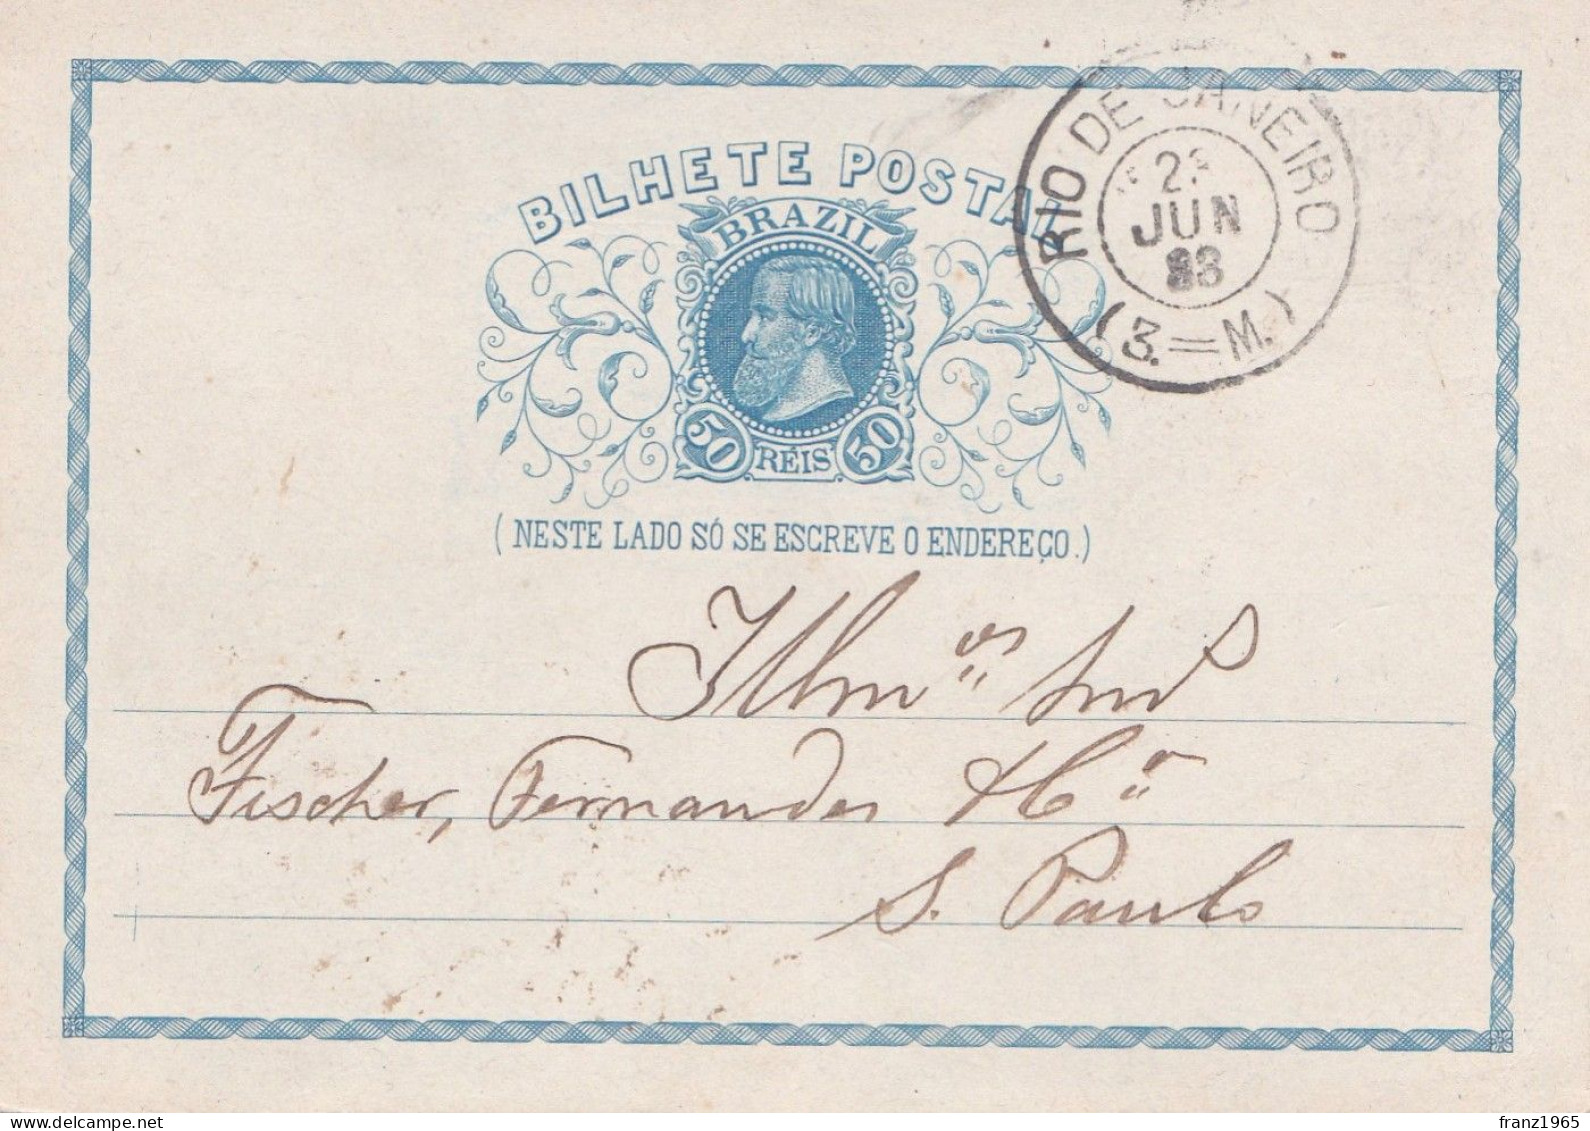 Bilhete Postal - Rio De Janeiro - 1883 - Lettres & Documents